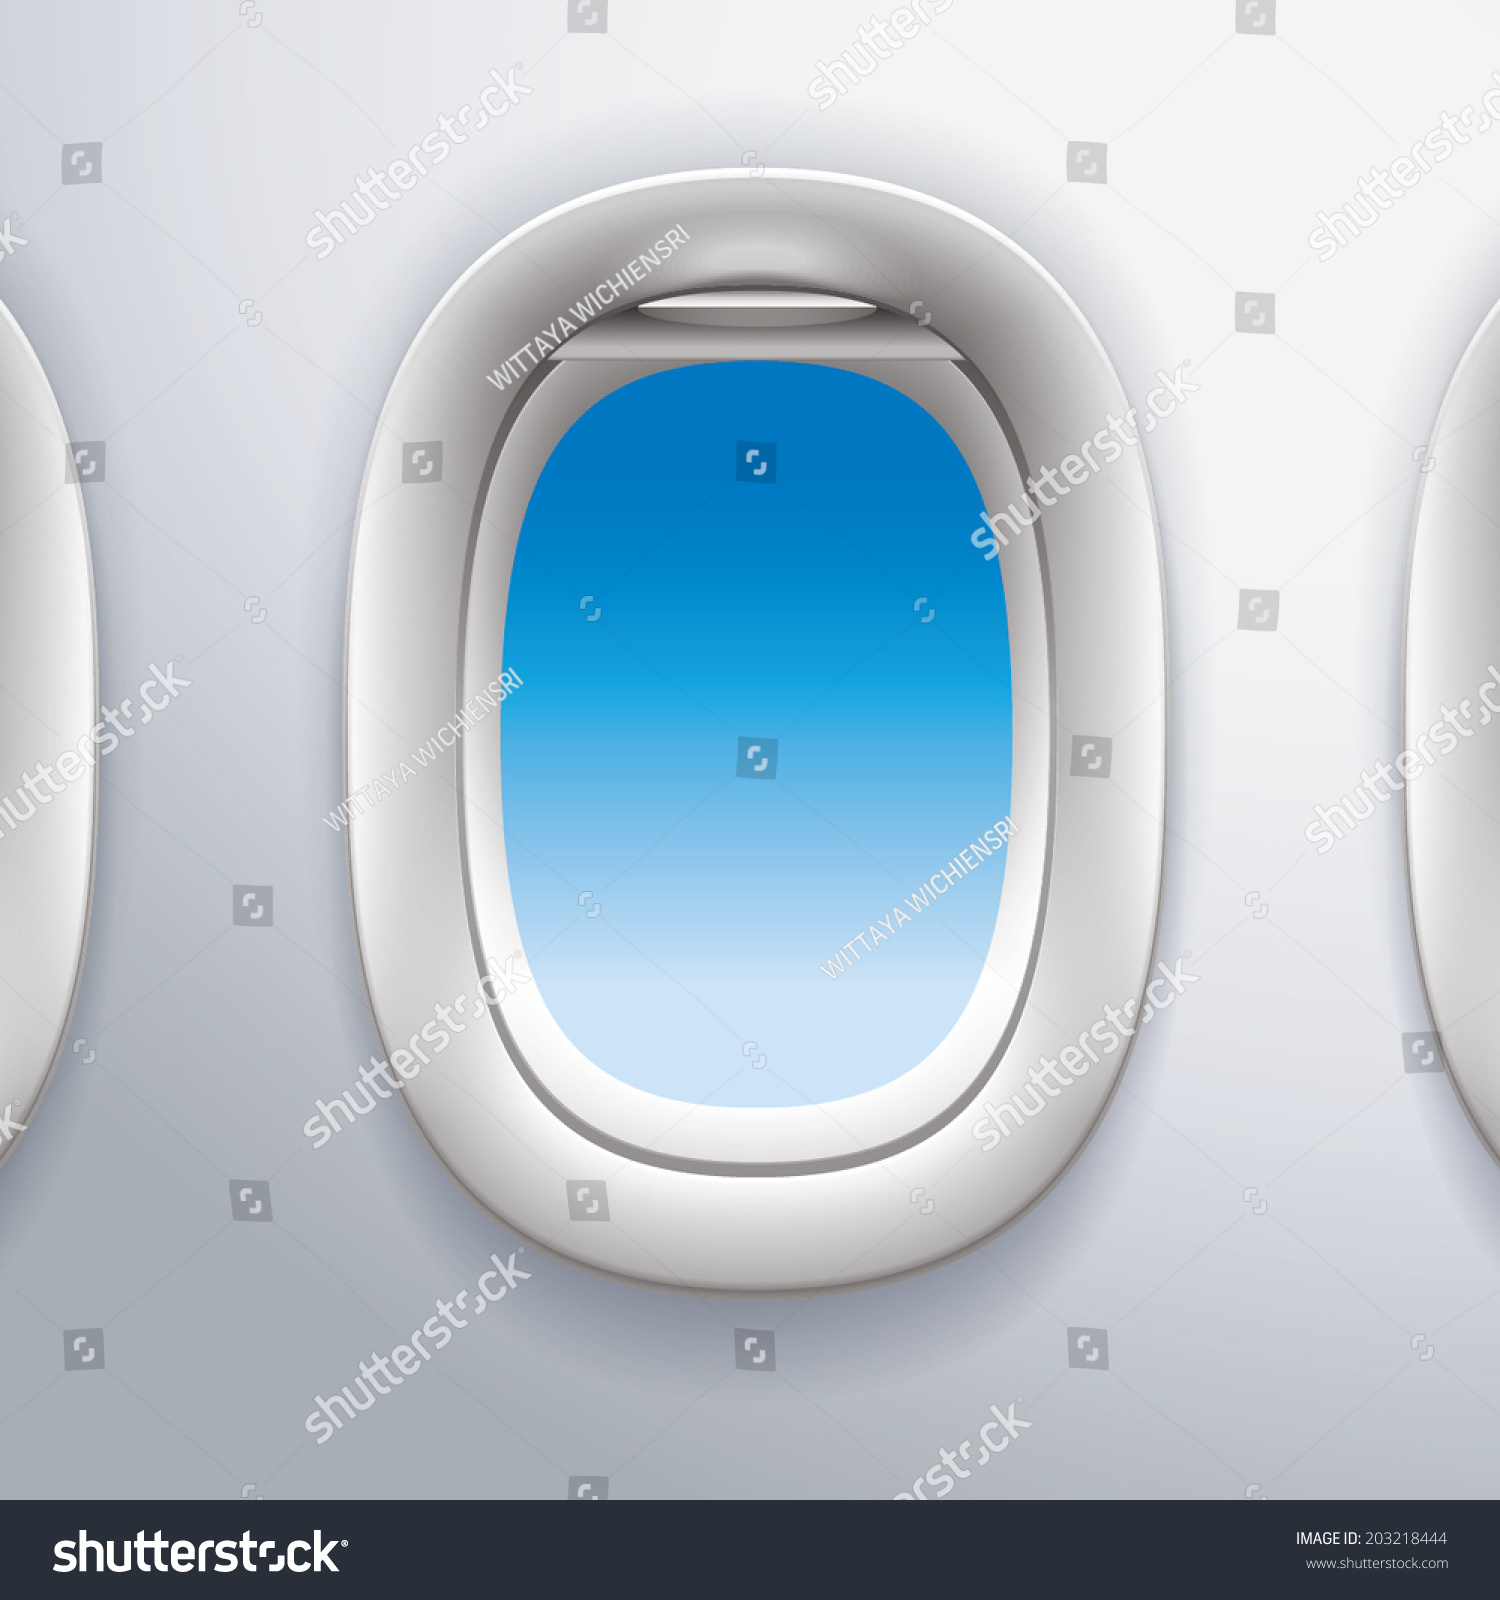 airplane window clipart - photo #13